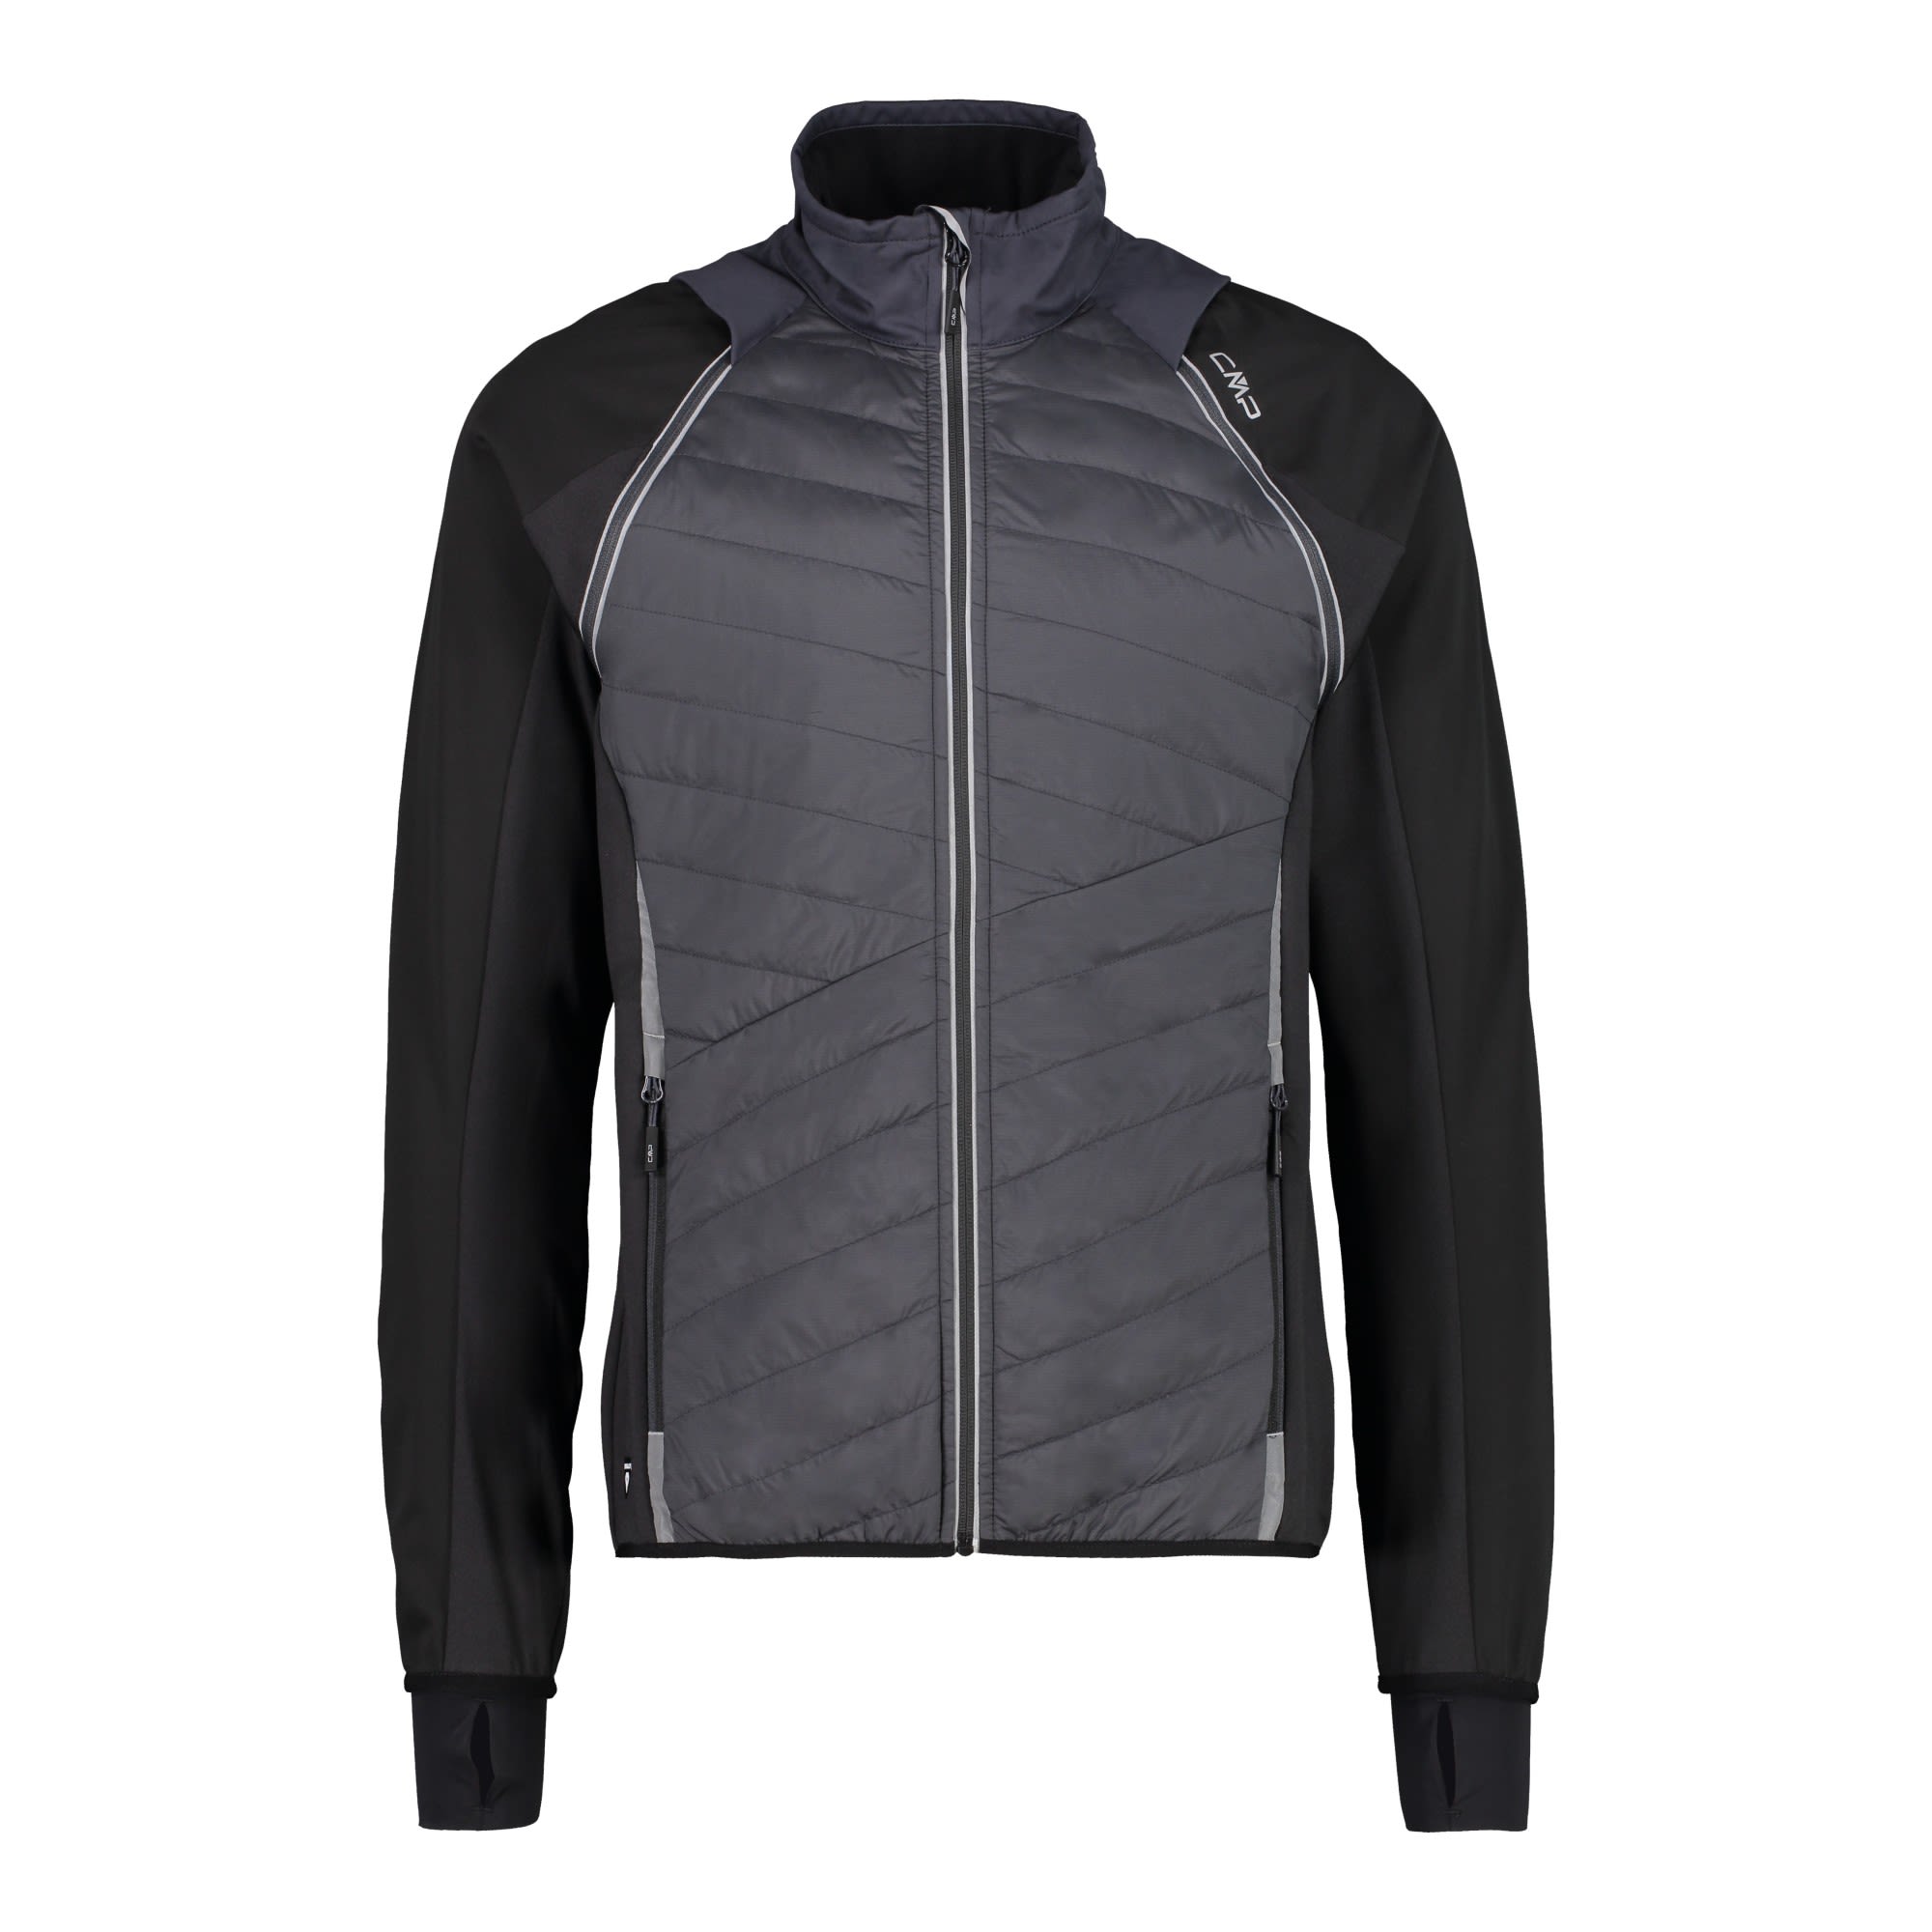 CMP Jacket Detachable Grau- Male PrimaLoft(R) Anoraks- Grsse 48 - Farbe Anthracite